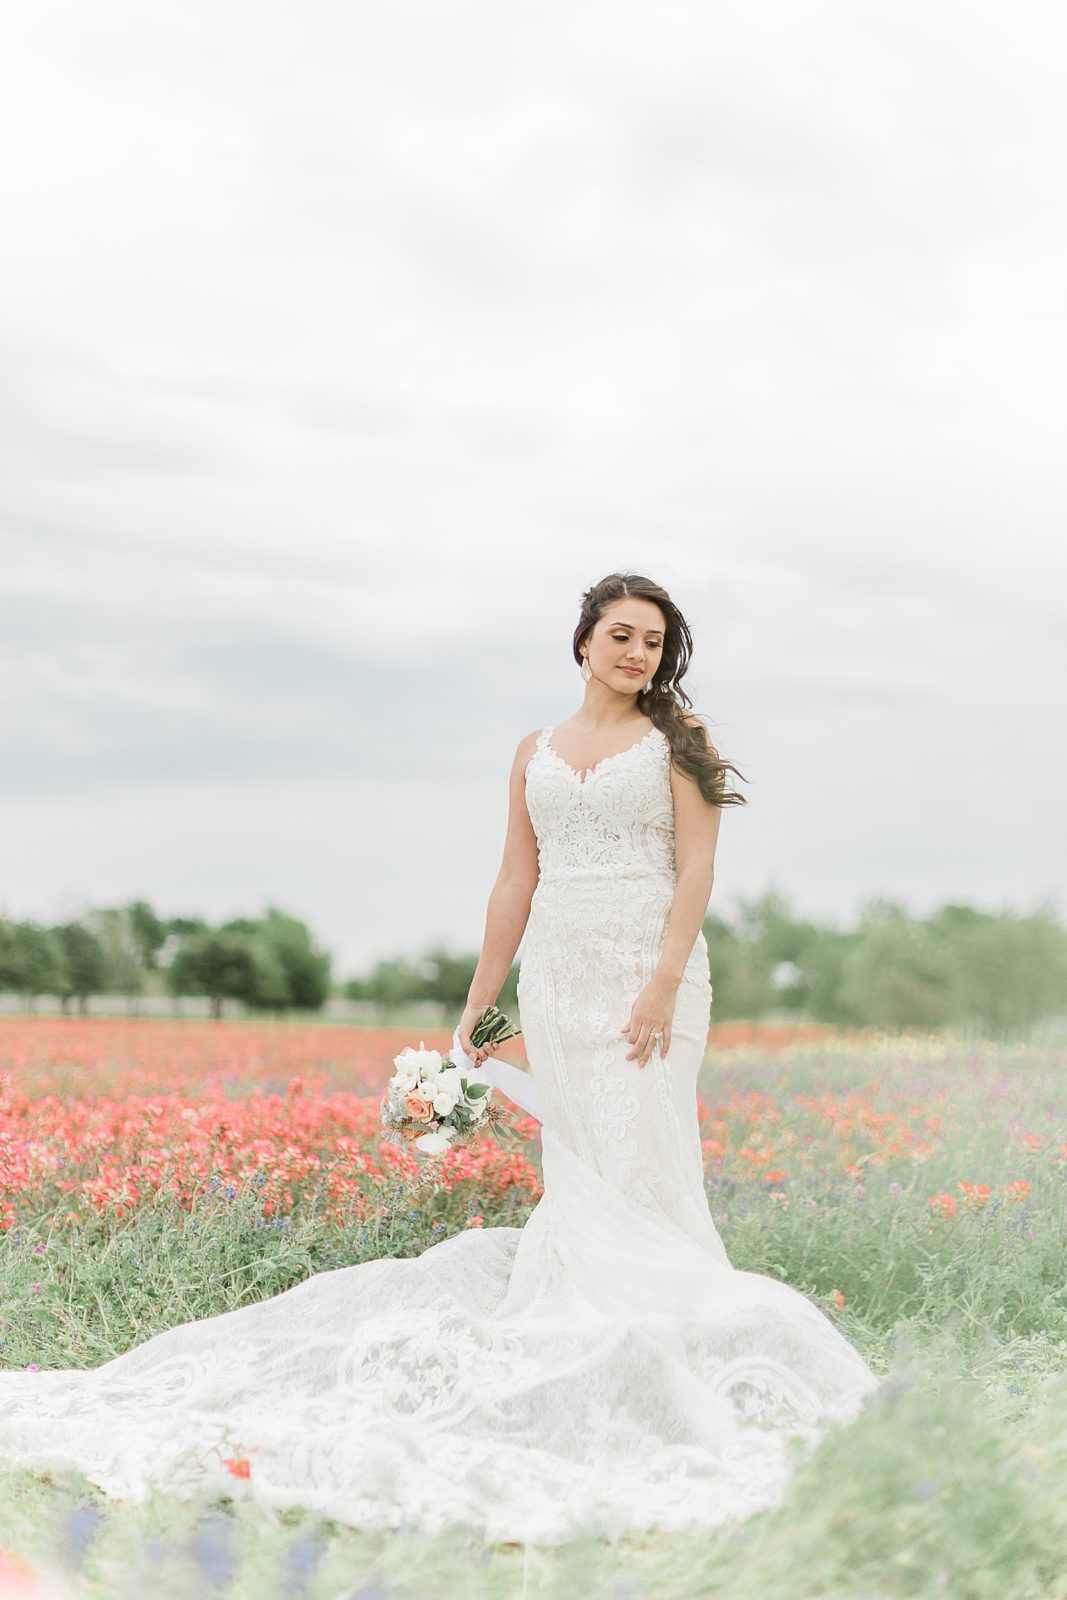 San Antonio Wildflower Sessions, Spring Mini Sessions, Anna Kay Photography, San Antonio Wedding Photographer